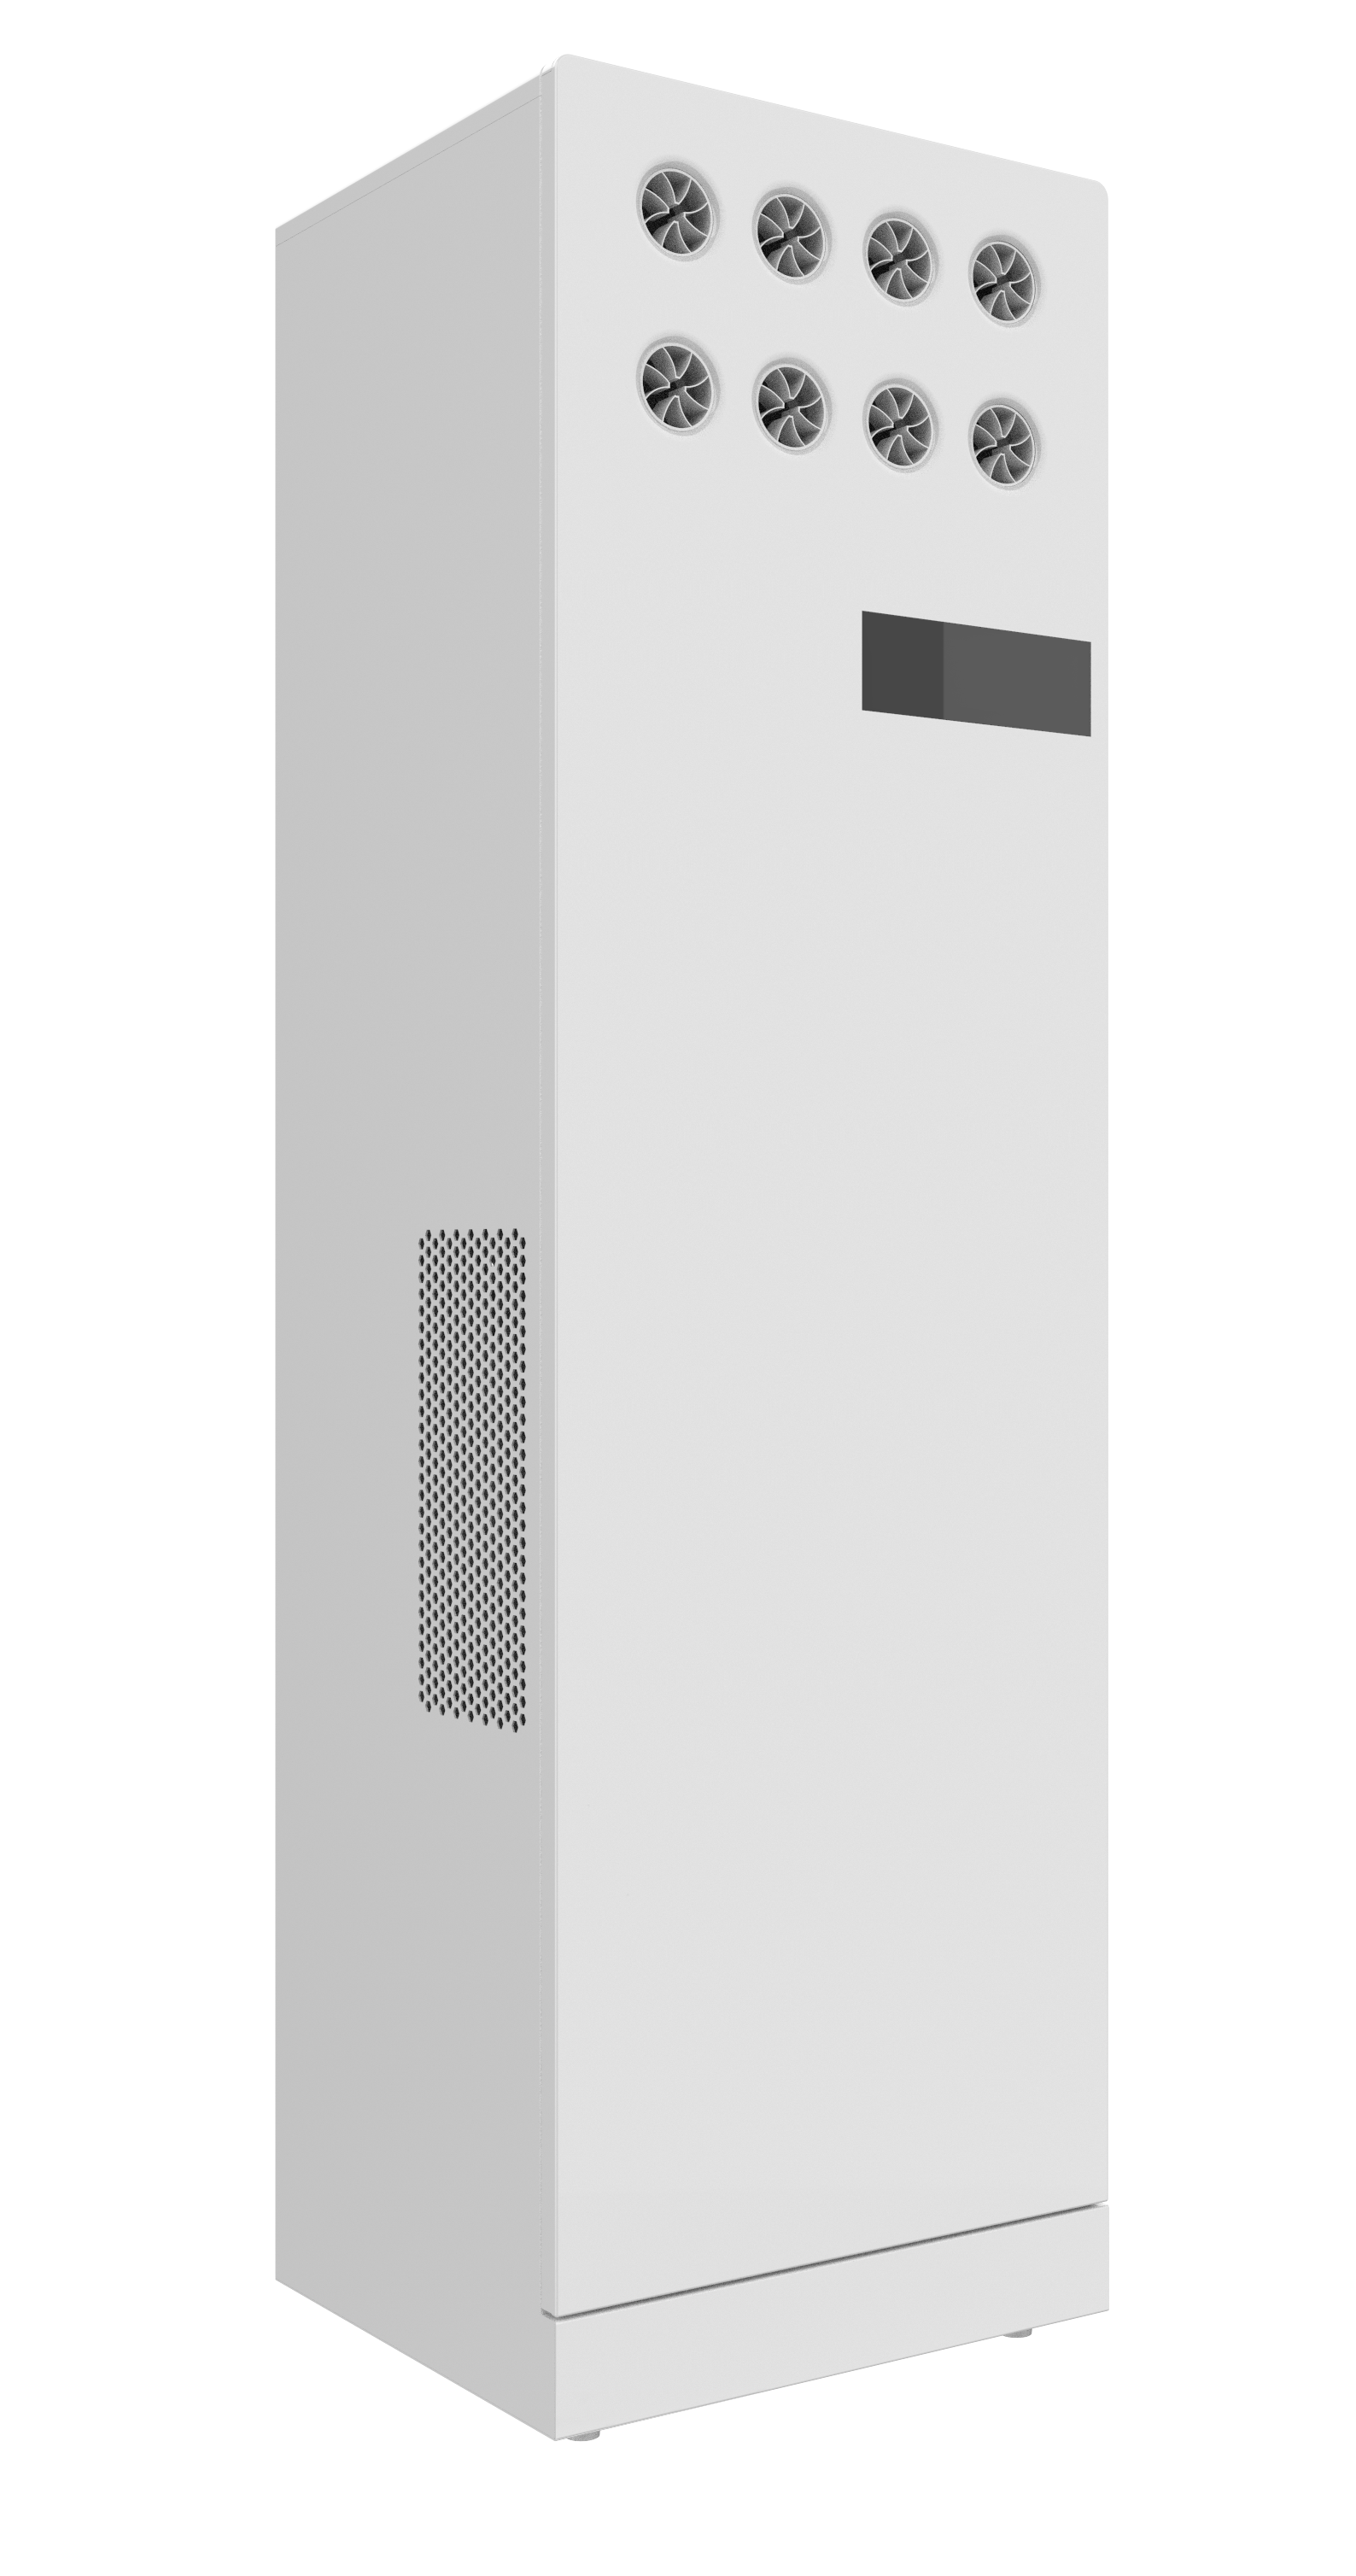 HC-800P Bidirectional Flow Cabinet Type Fresh Air Purifier